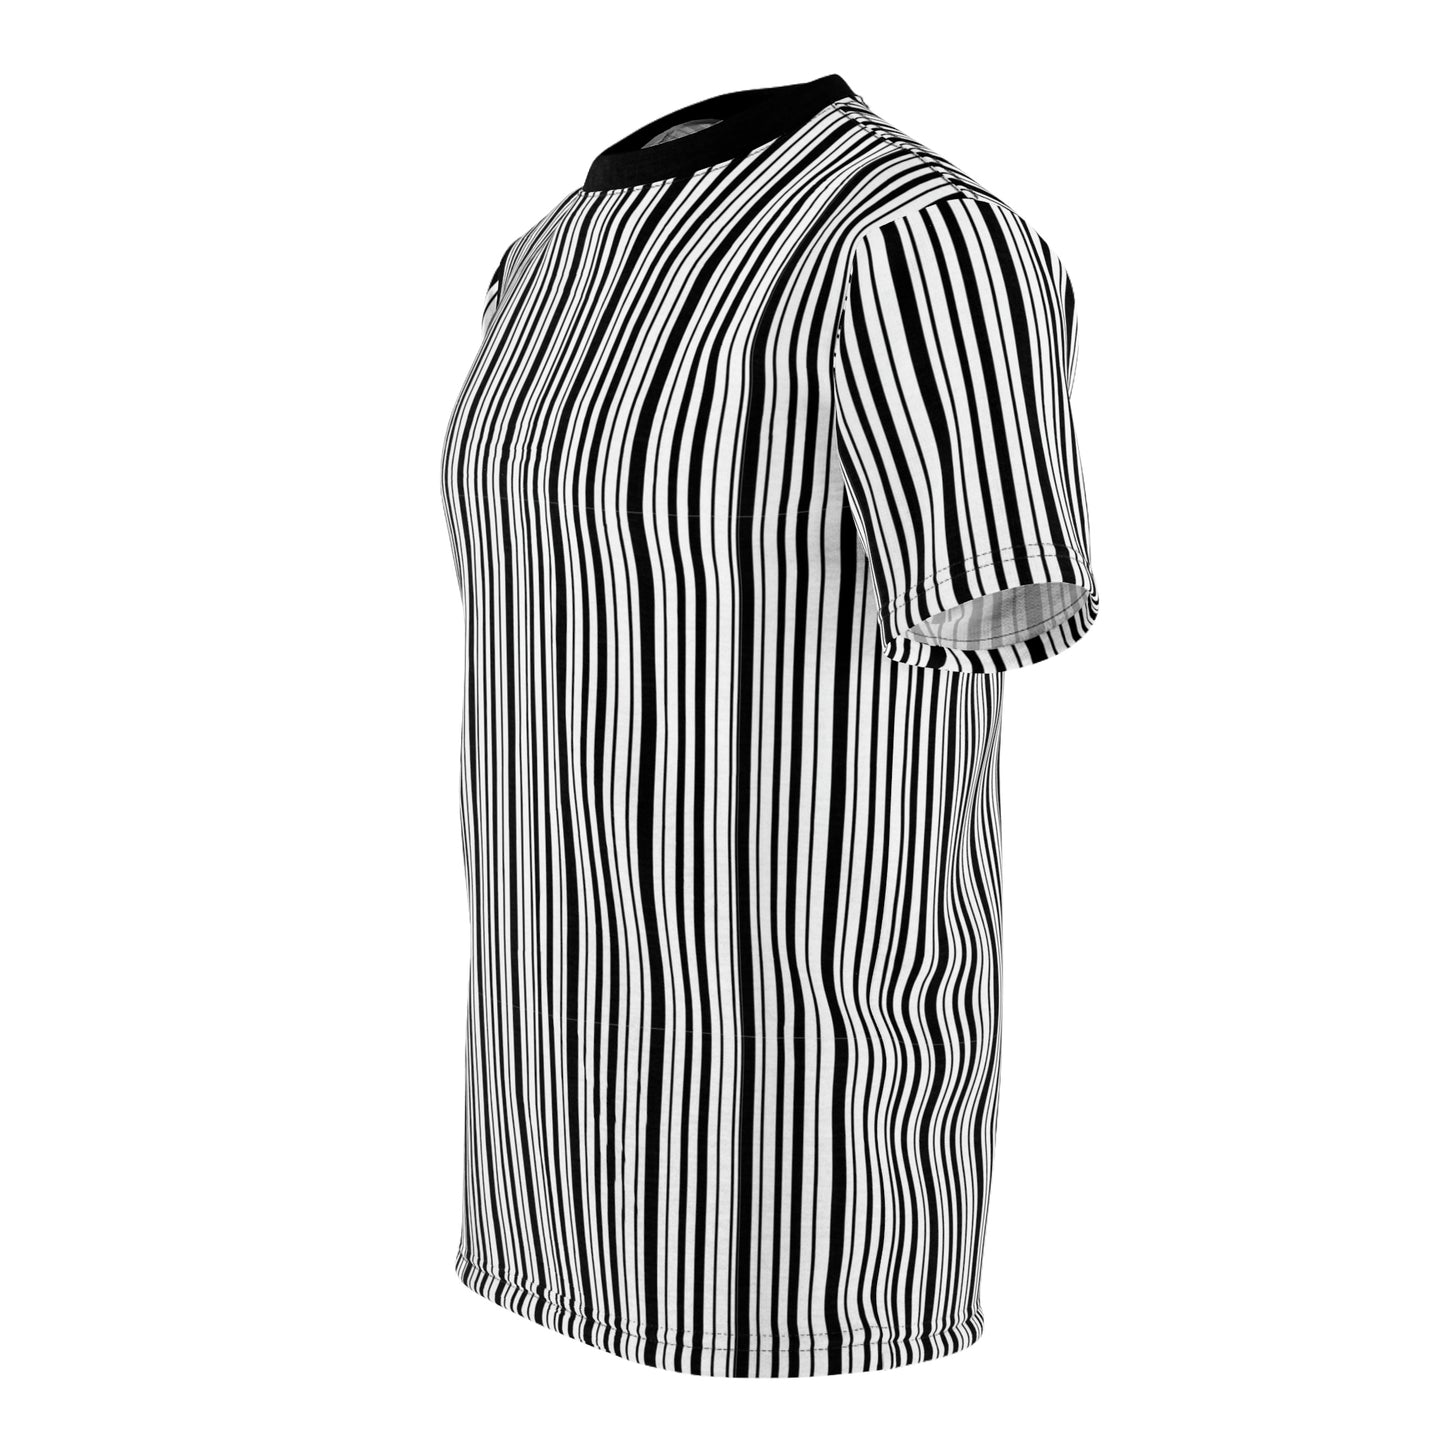 Black White Striped Tshirt, Vertical Stripe Designer Graphic Aesthetic Fashion Crewneck Men Women Tee Top Short Sleeve Shirt